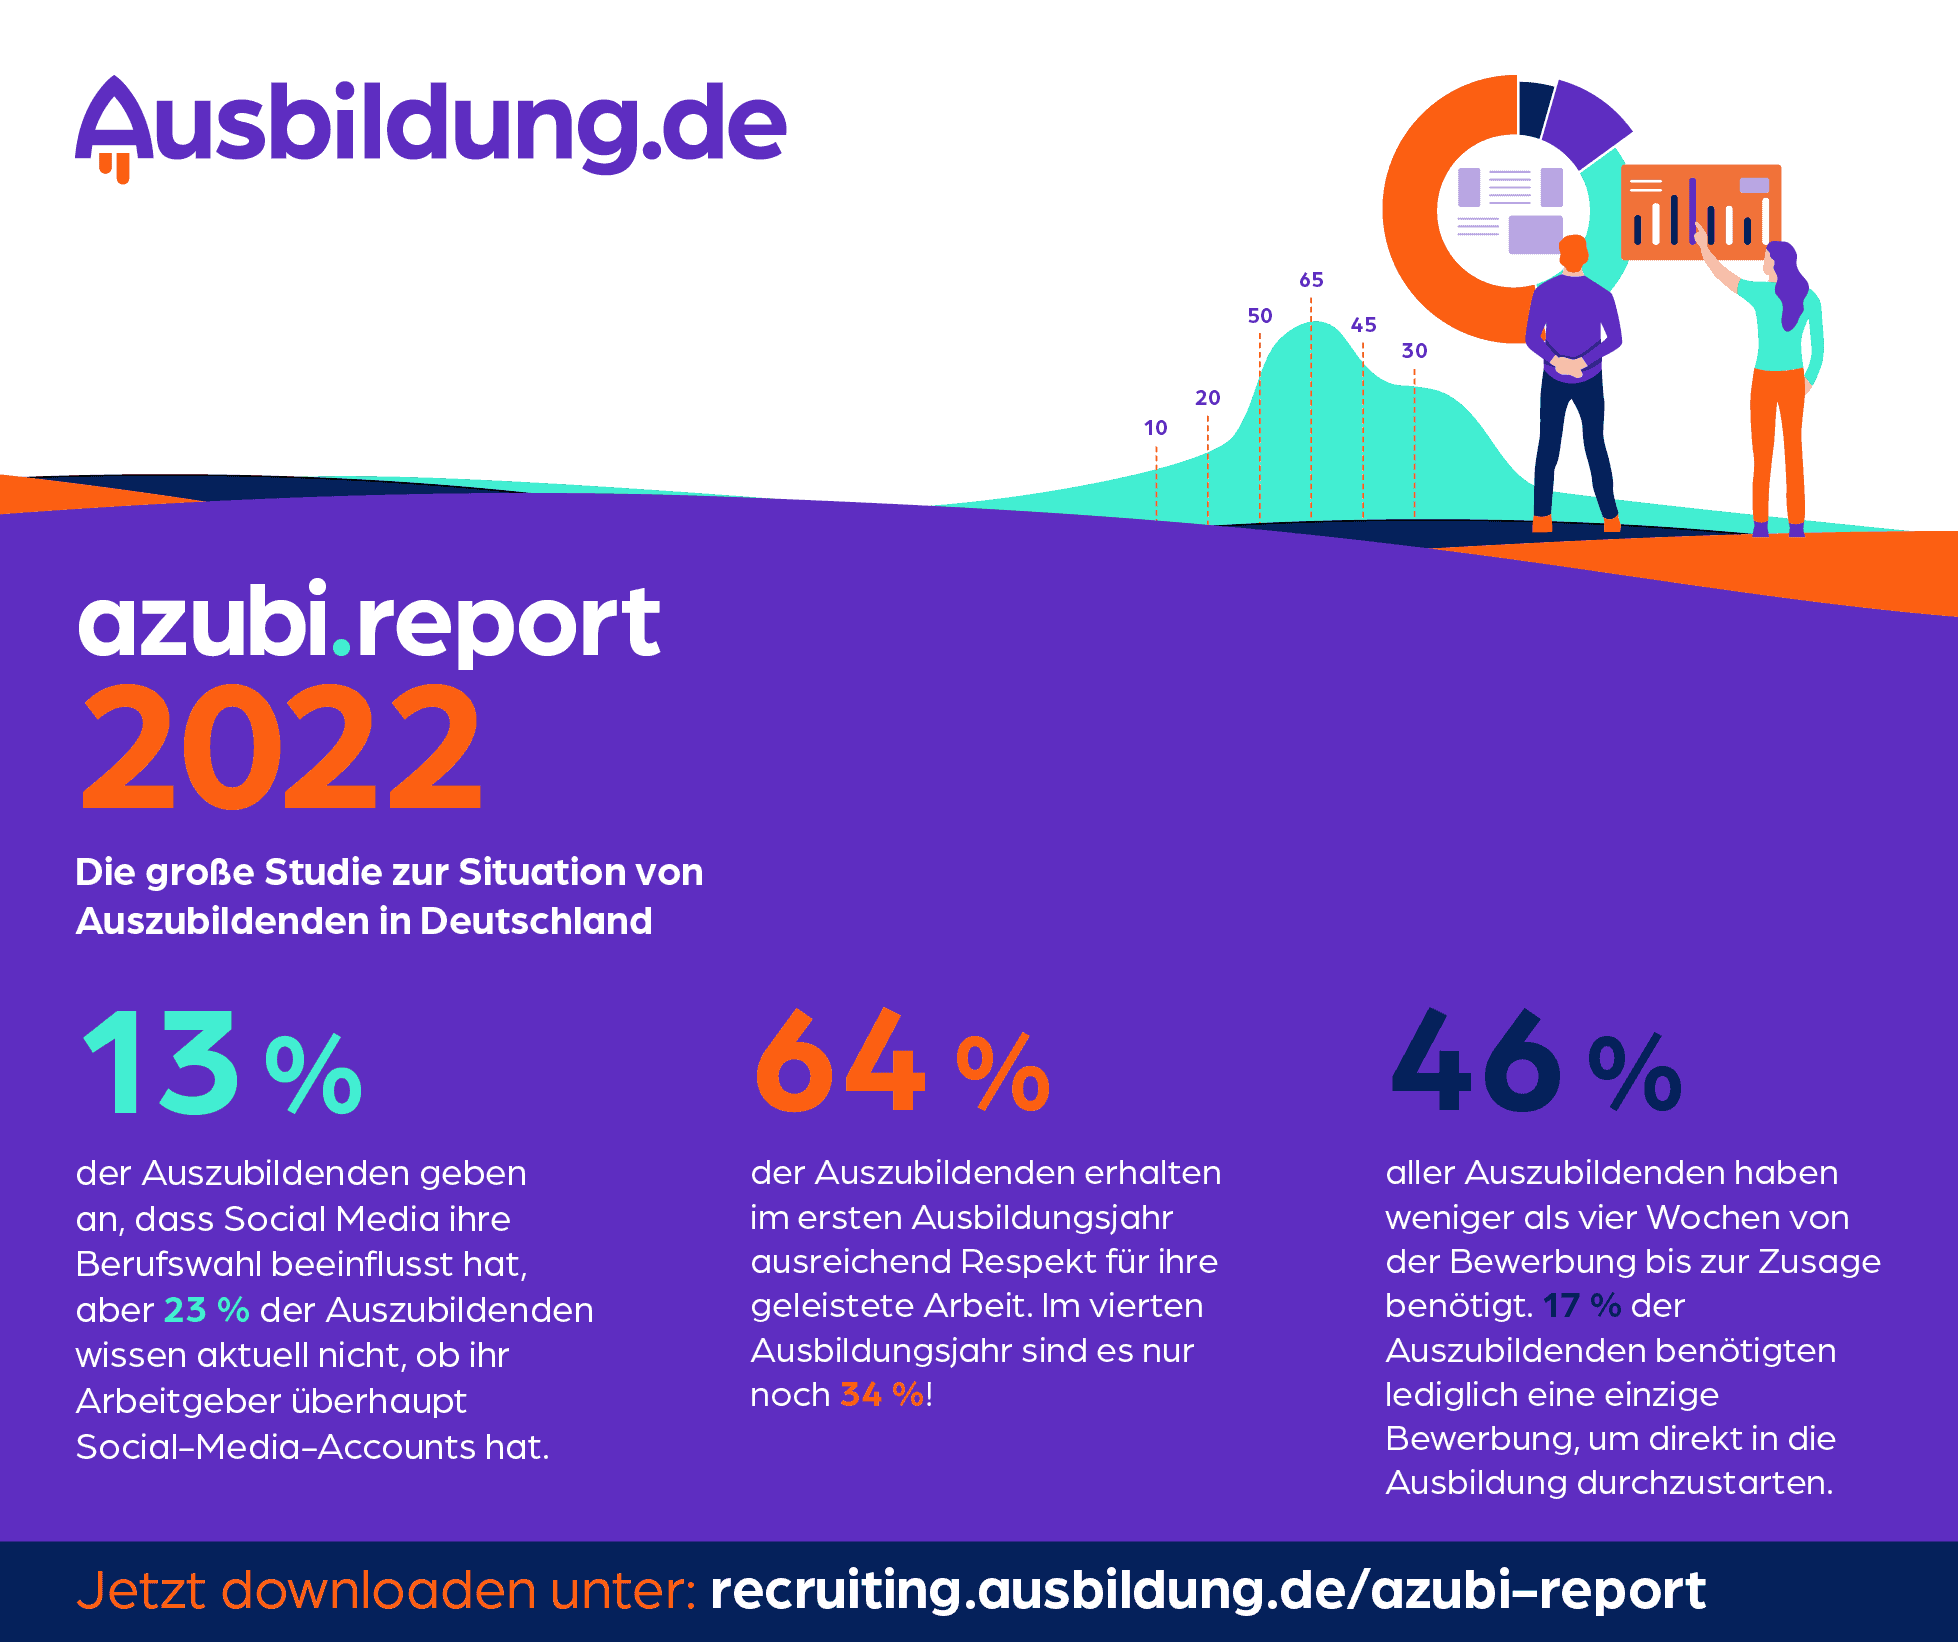 azubi.report 2022